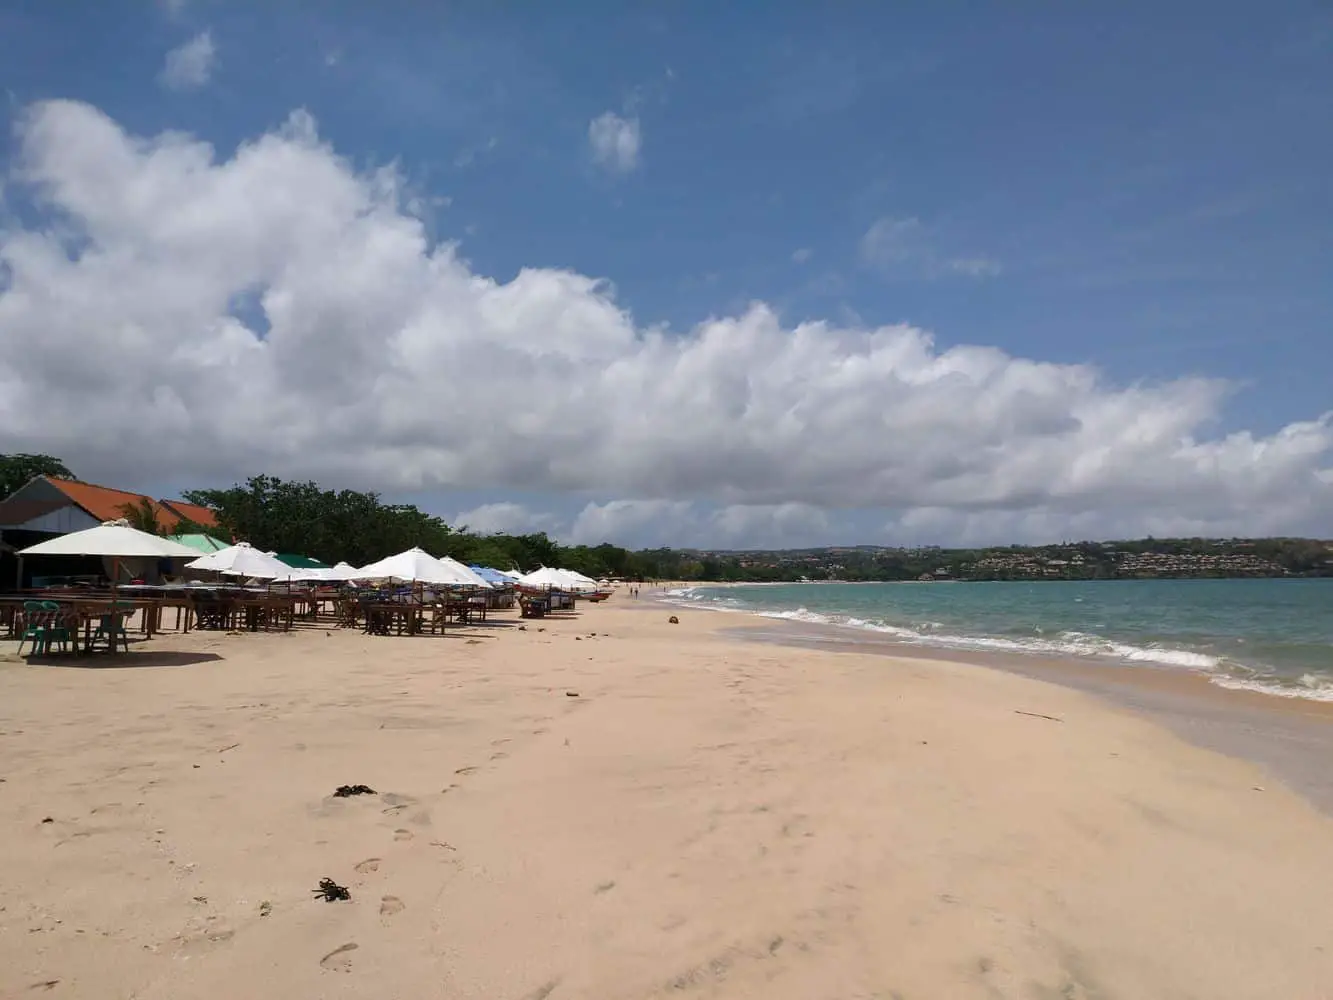 Jimbaran Bay Beach Bali - Hotel Accommodation, Resorts & Villas